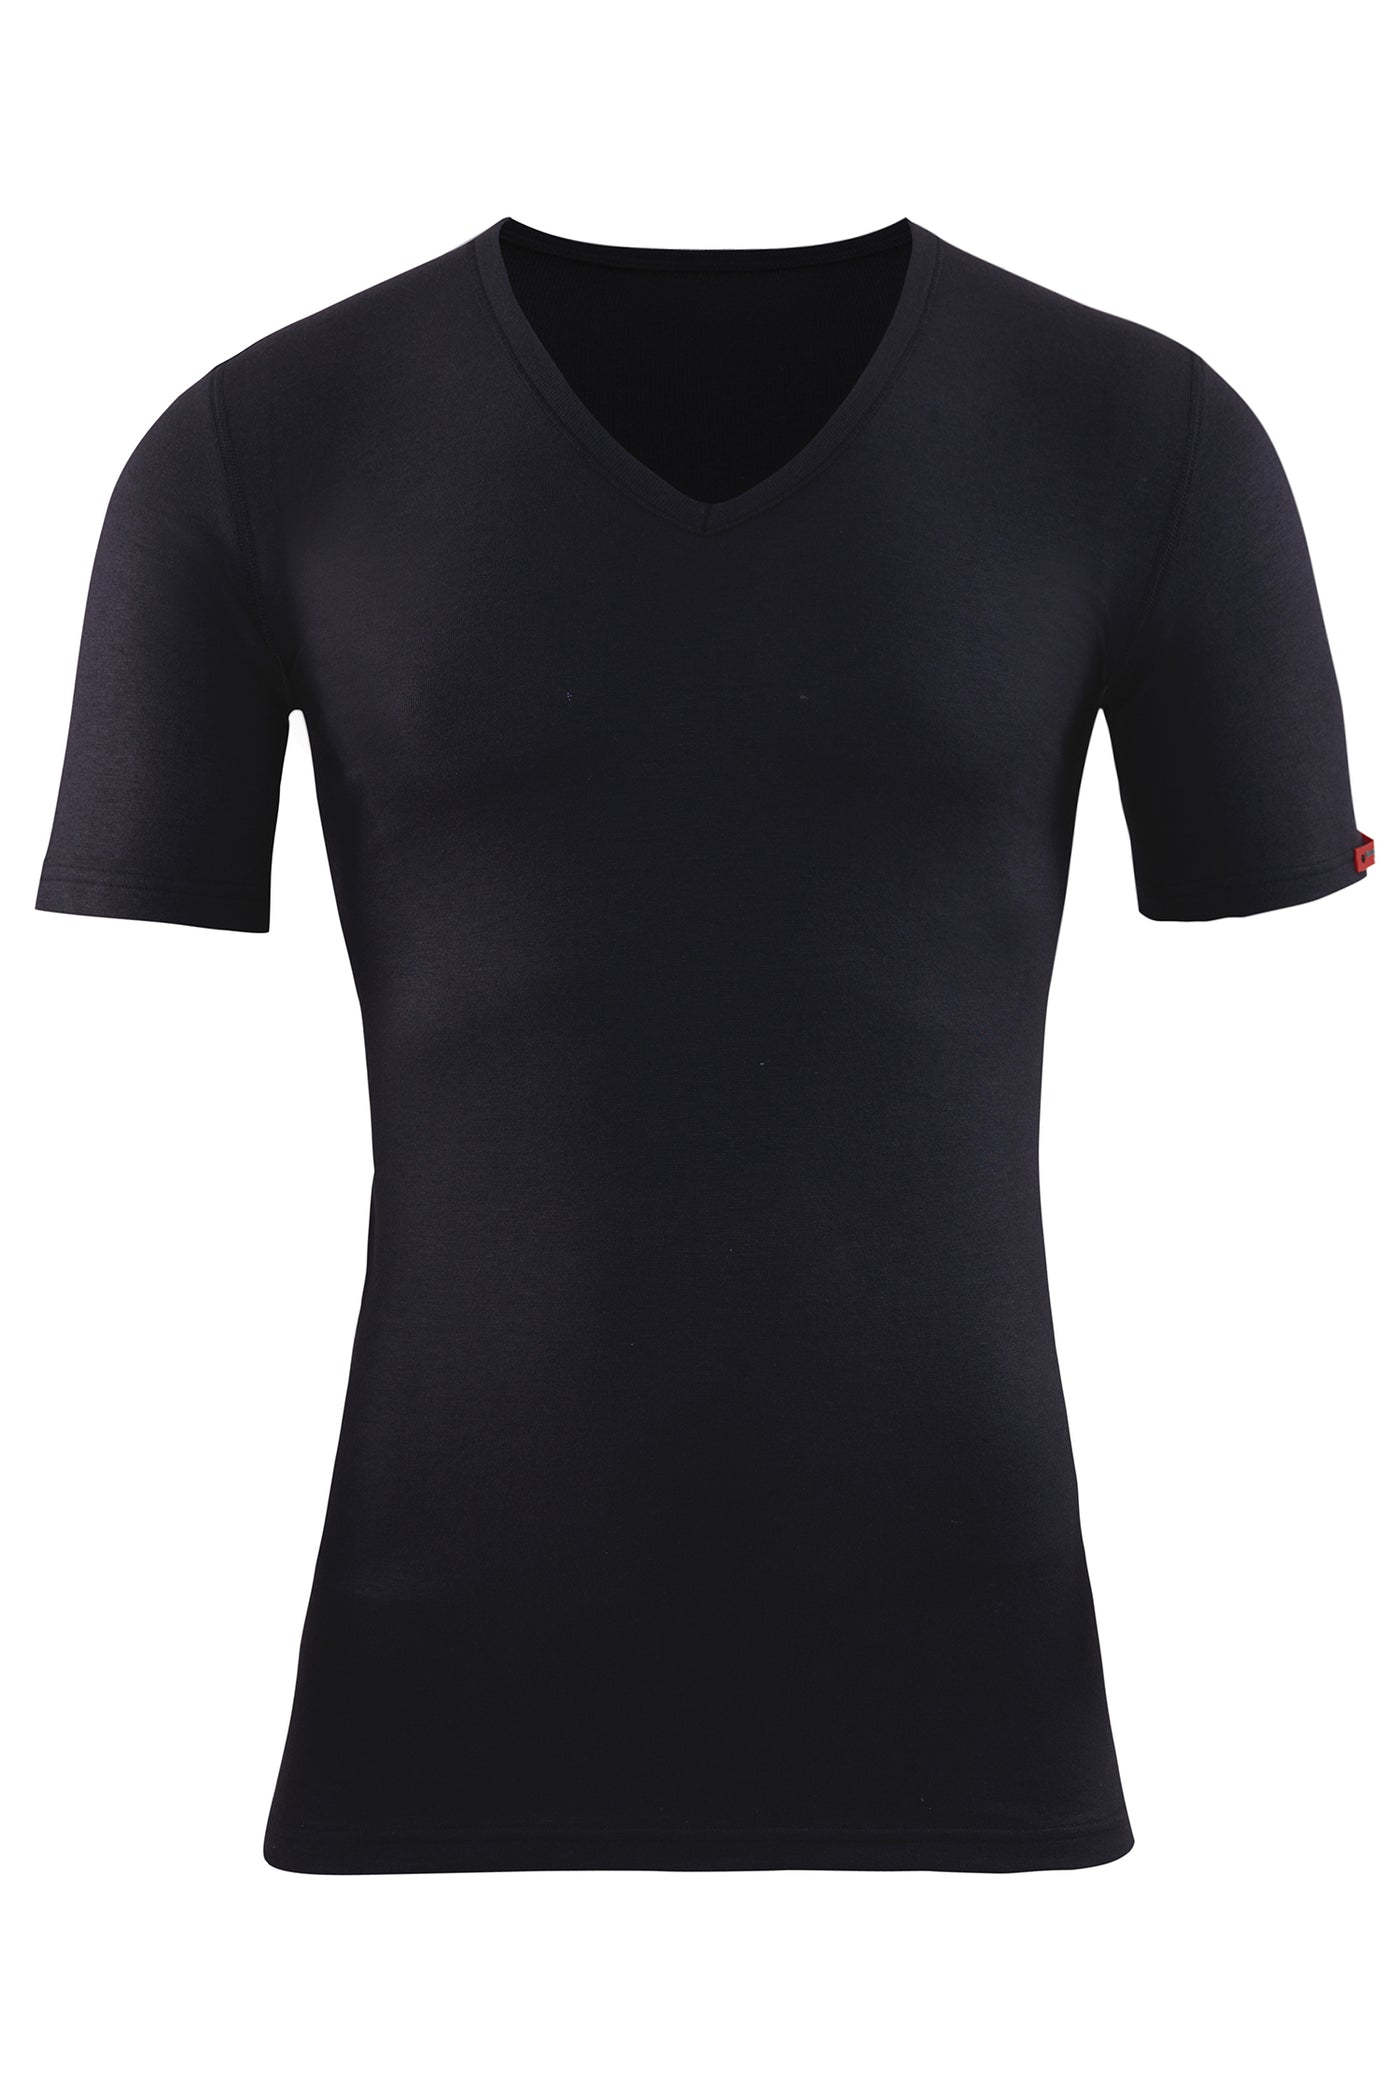 blackspade-Men's thermal t-shirt-1263, level-2-underwear-black